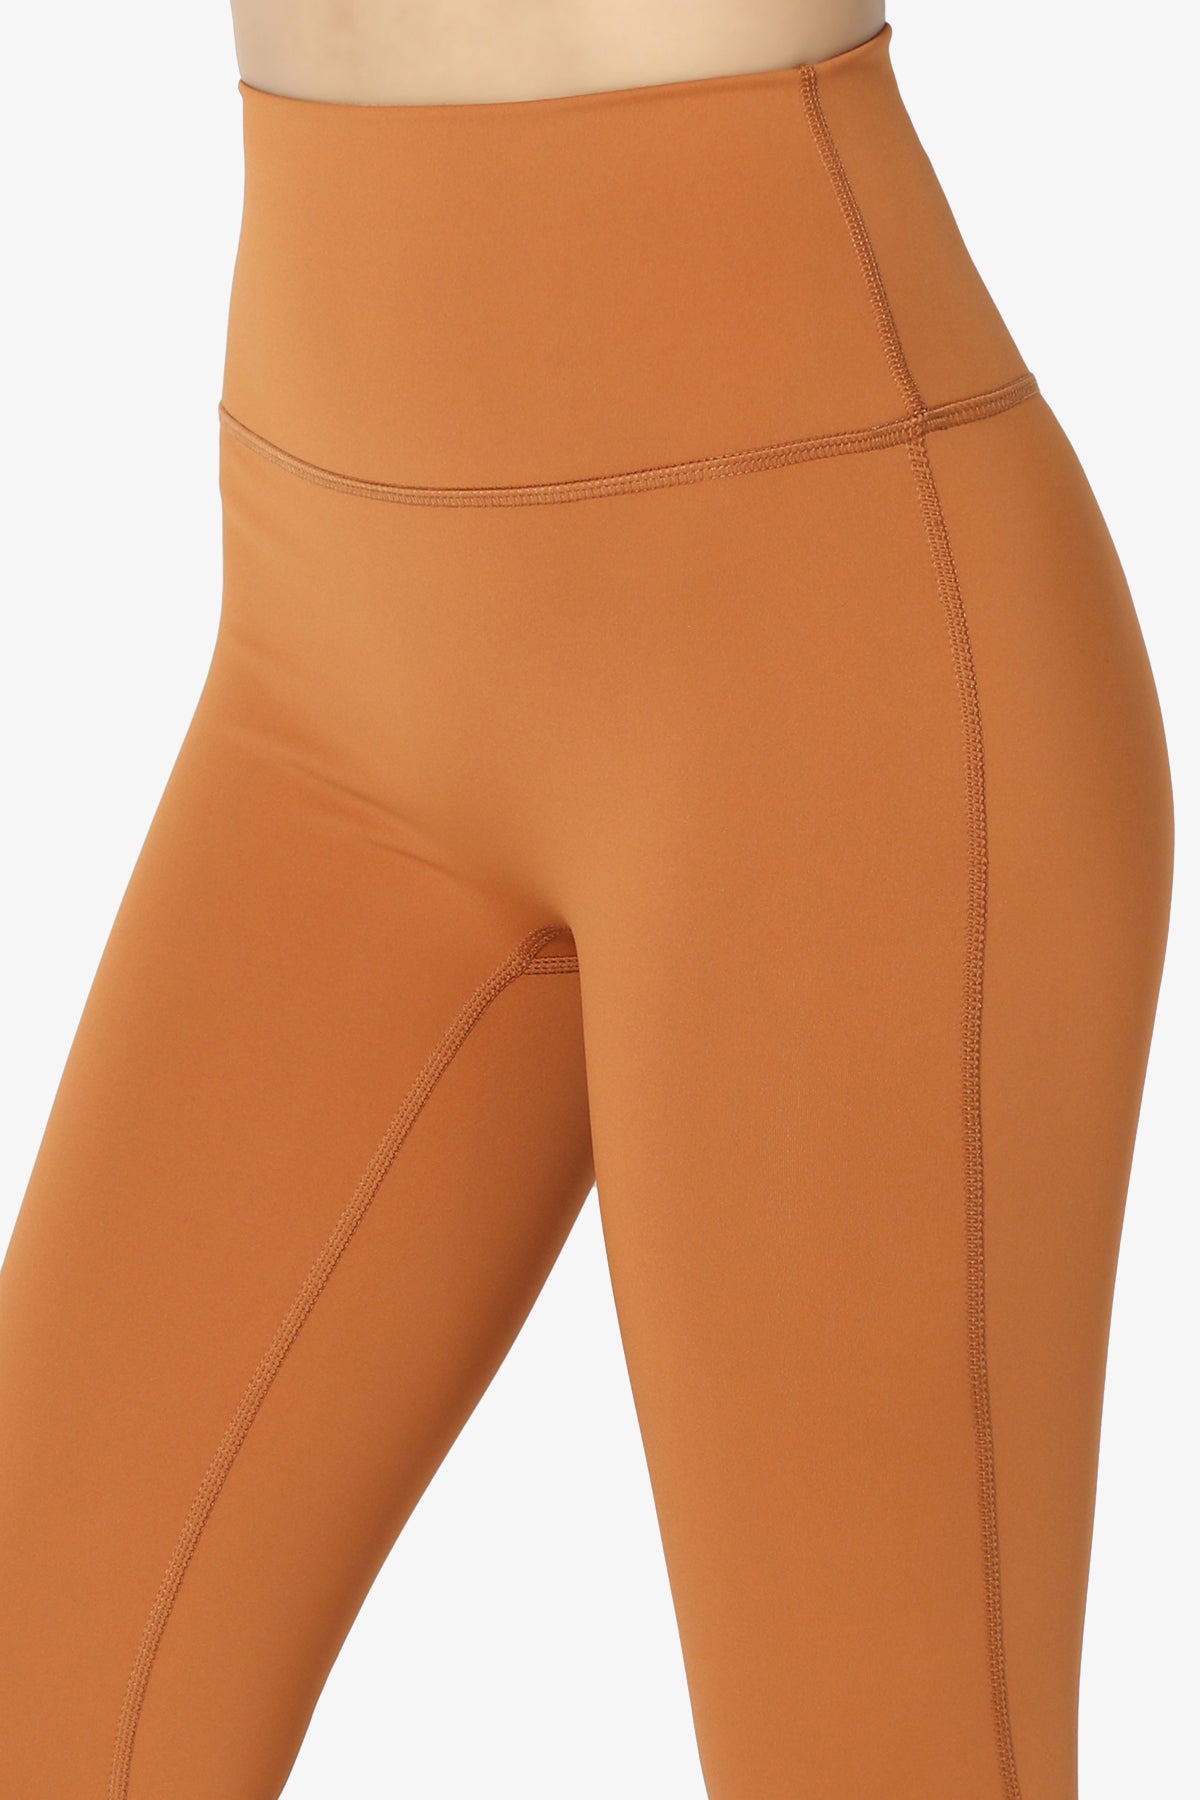 JWZUY High Waist Yoga Pants Tummy Control Workout Running Yoga Leggings  Orange S